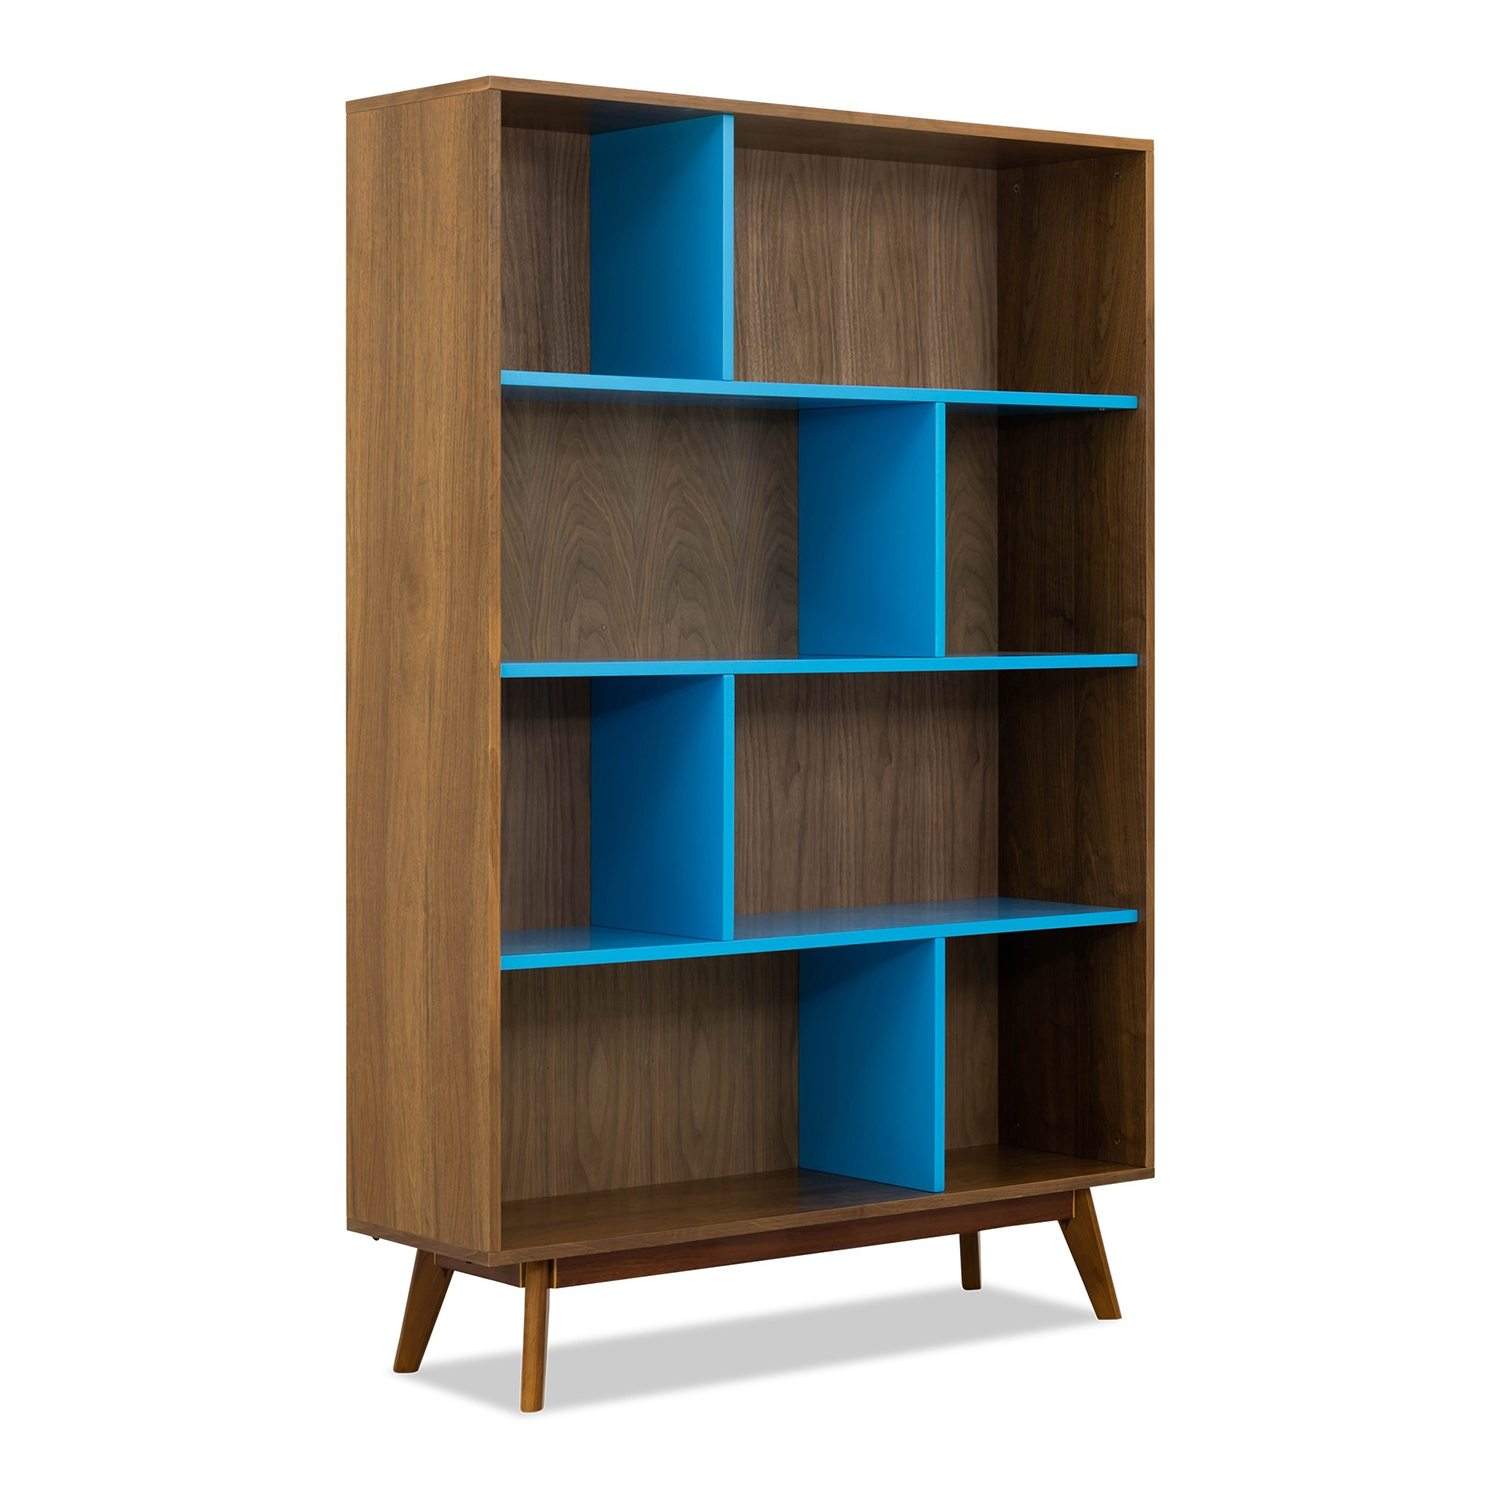 Good Quality floor stand storage bookshelf cube book case wo